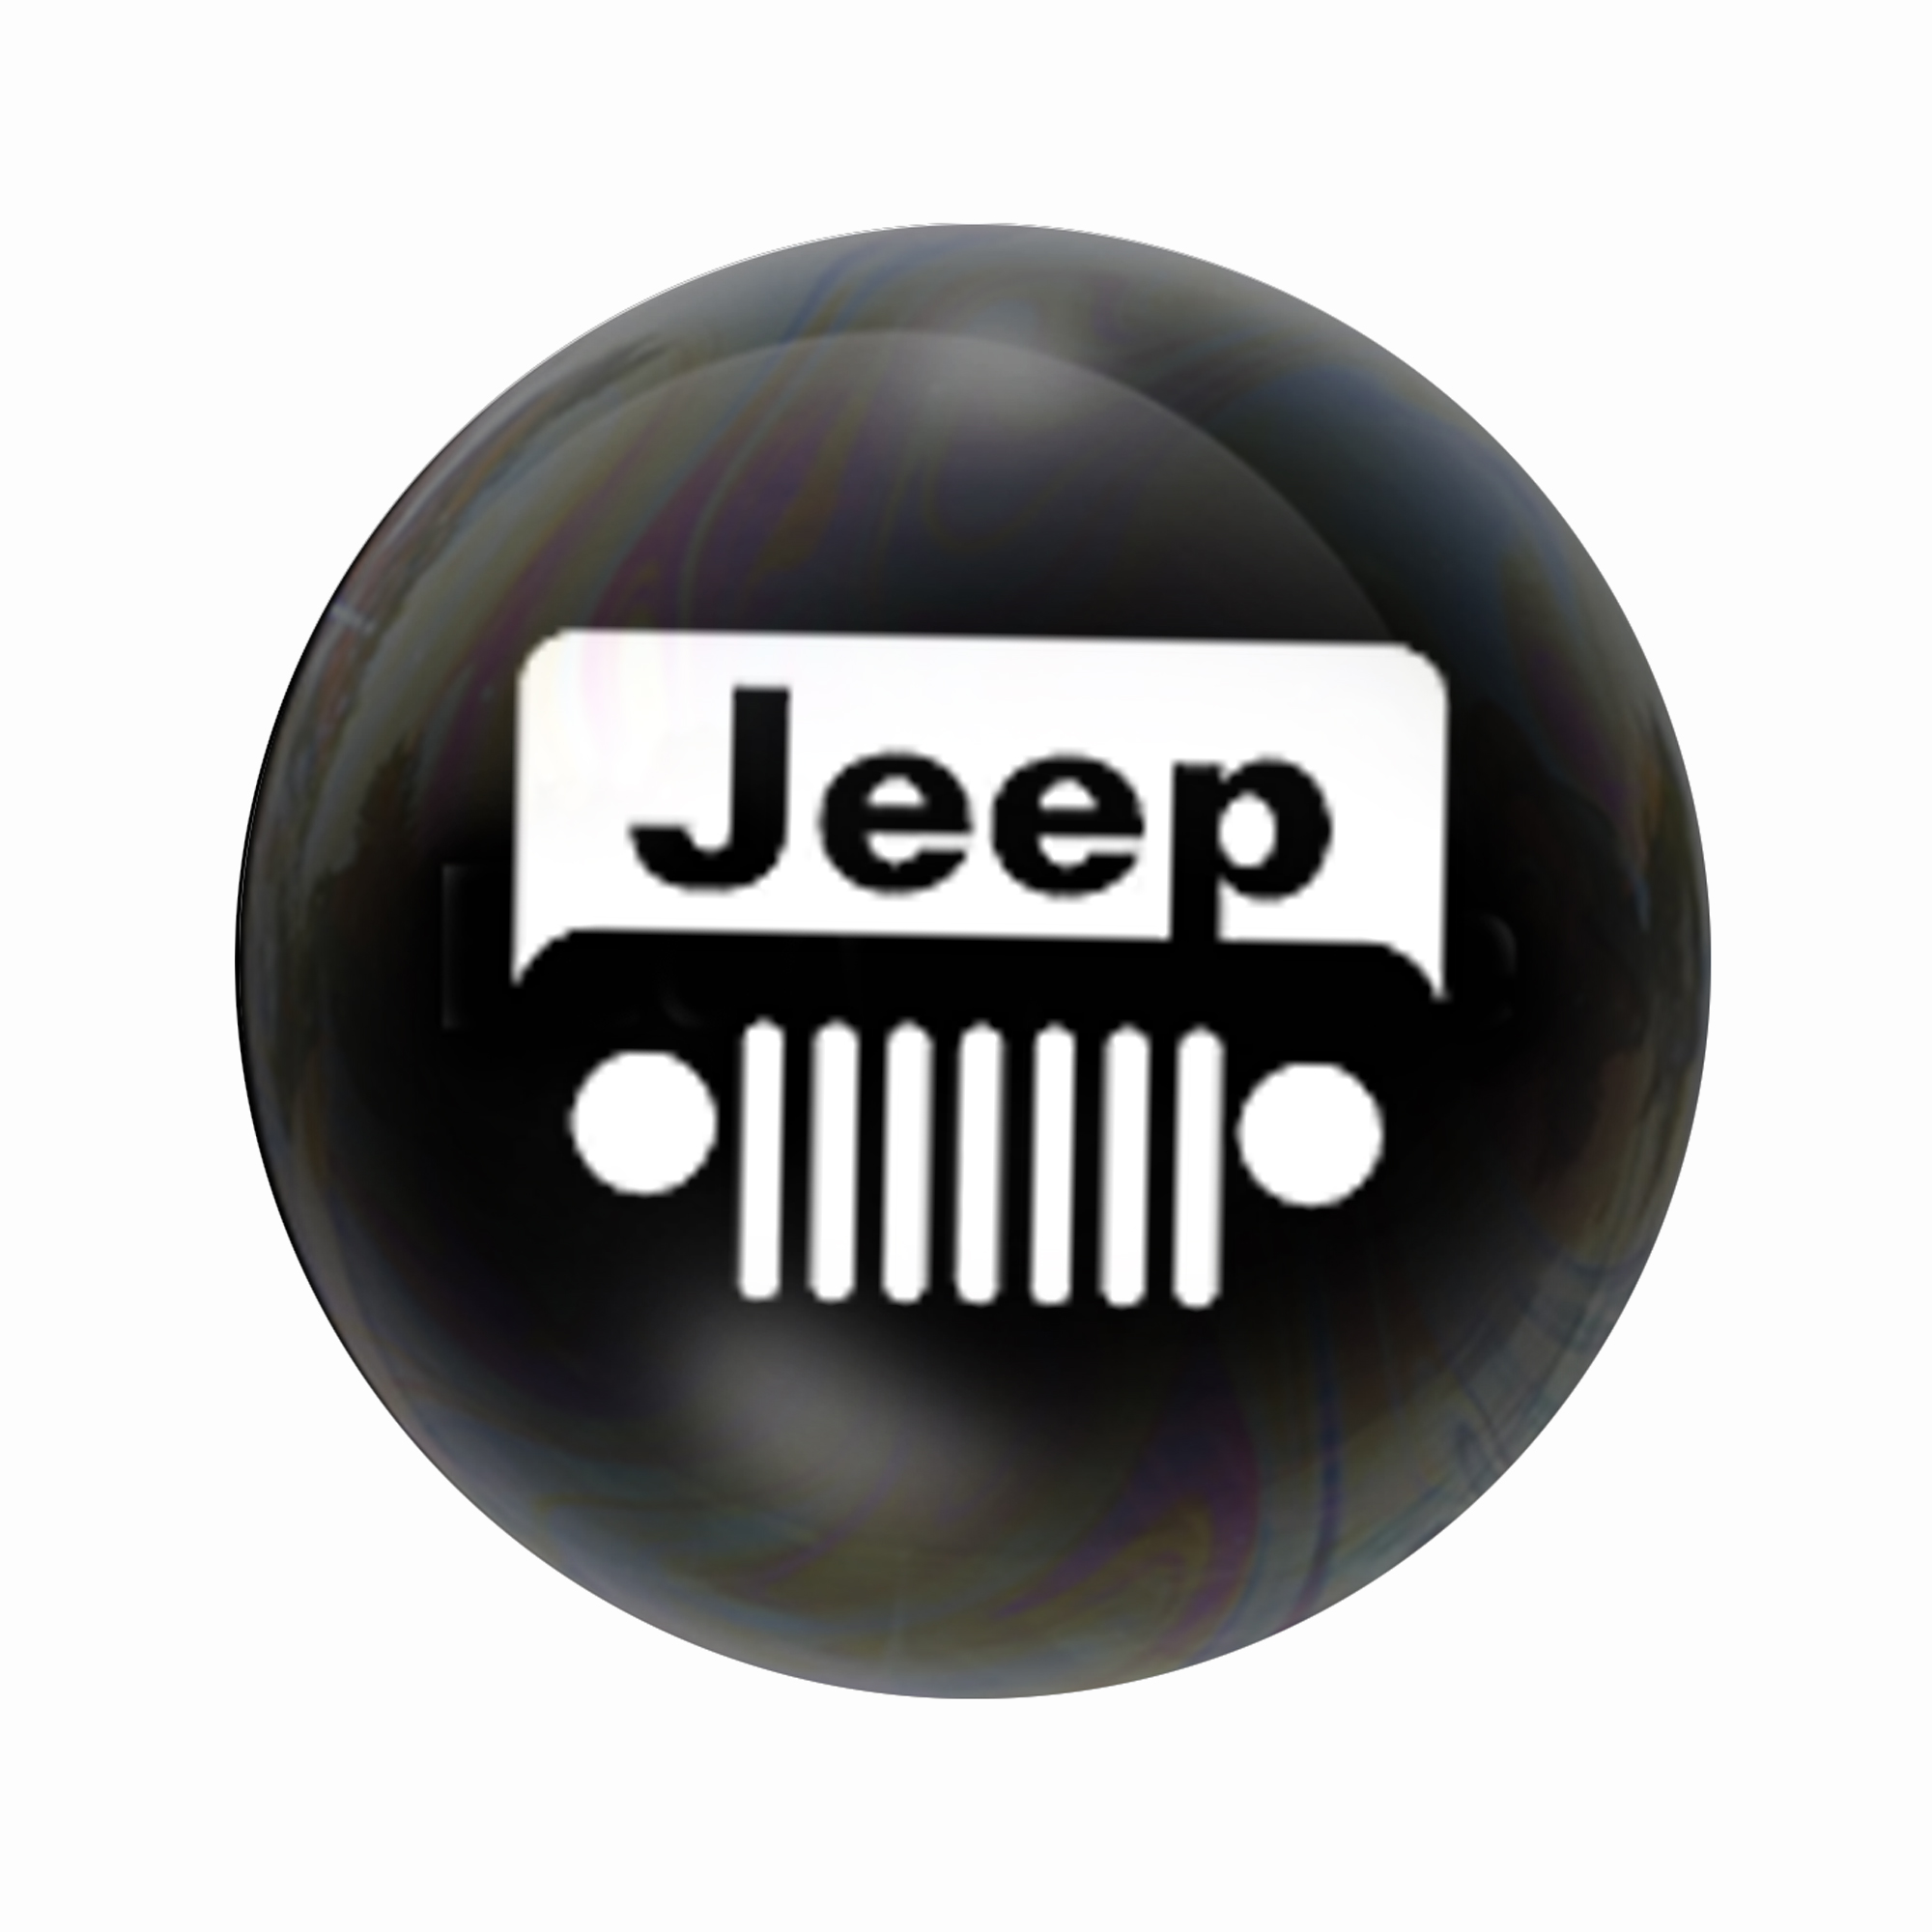 مگنت عرش طرح لوگو ماشین جیپ jeep کد Asm3458 